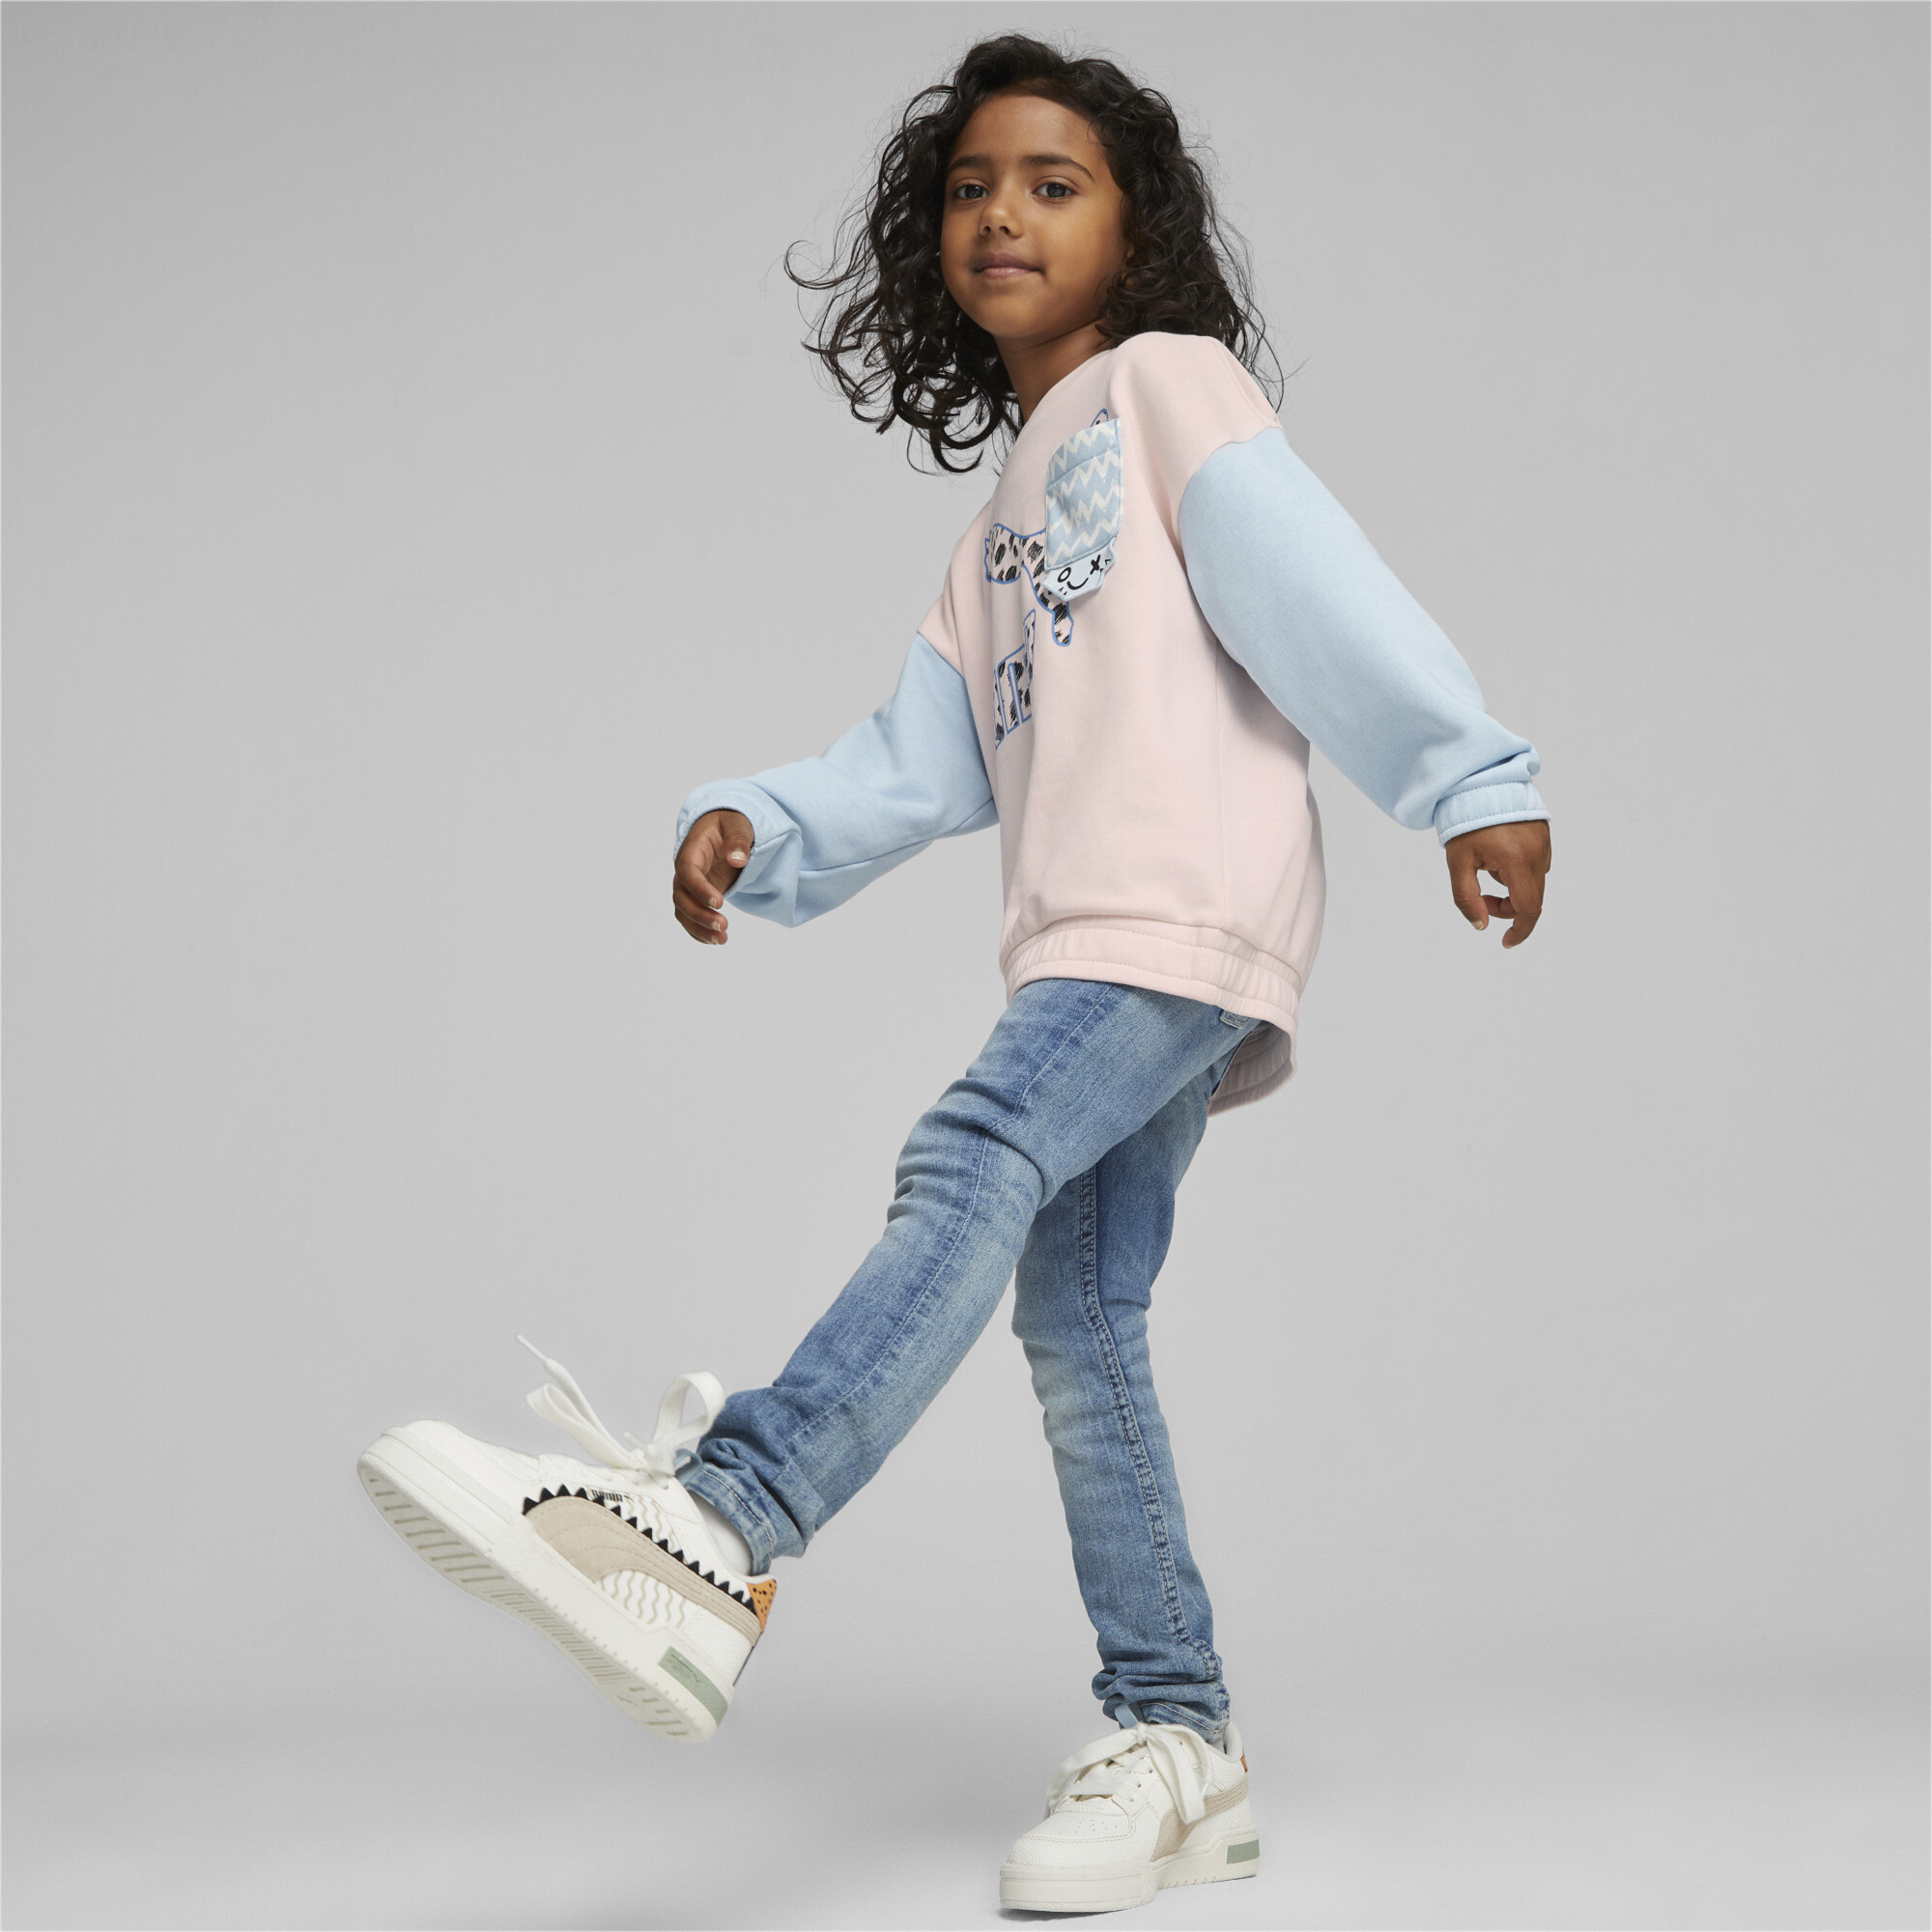 PUMA Classics Mix Match Sweatshirt In Pink, Size 5-6 Youth